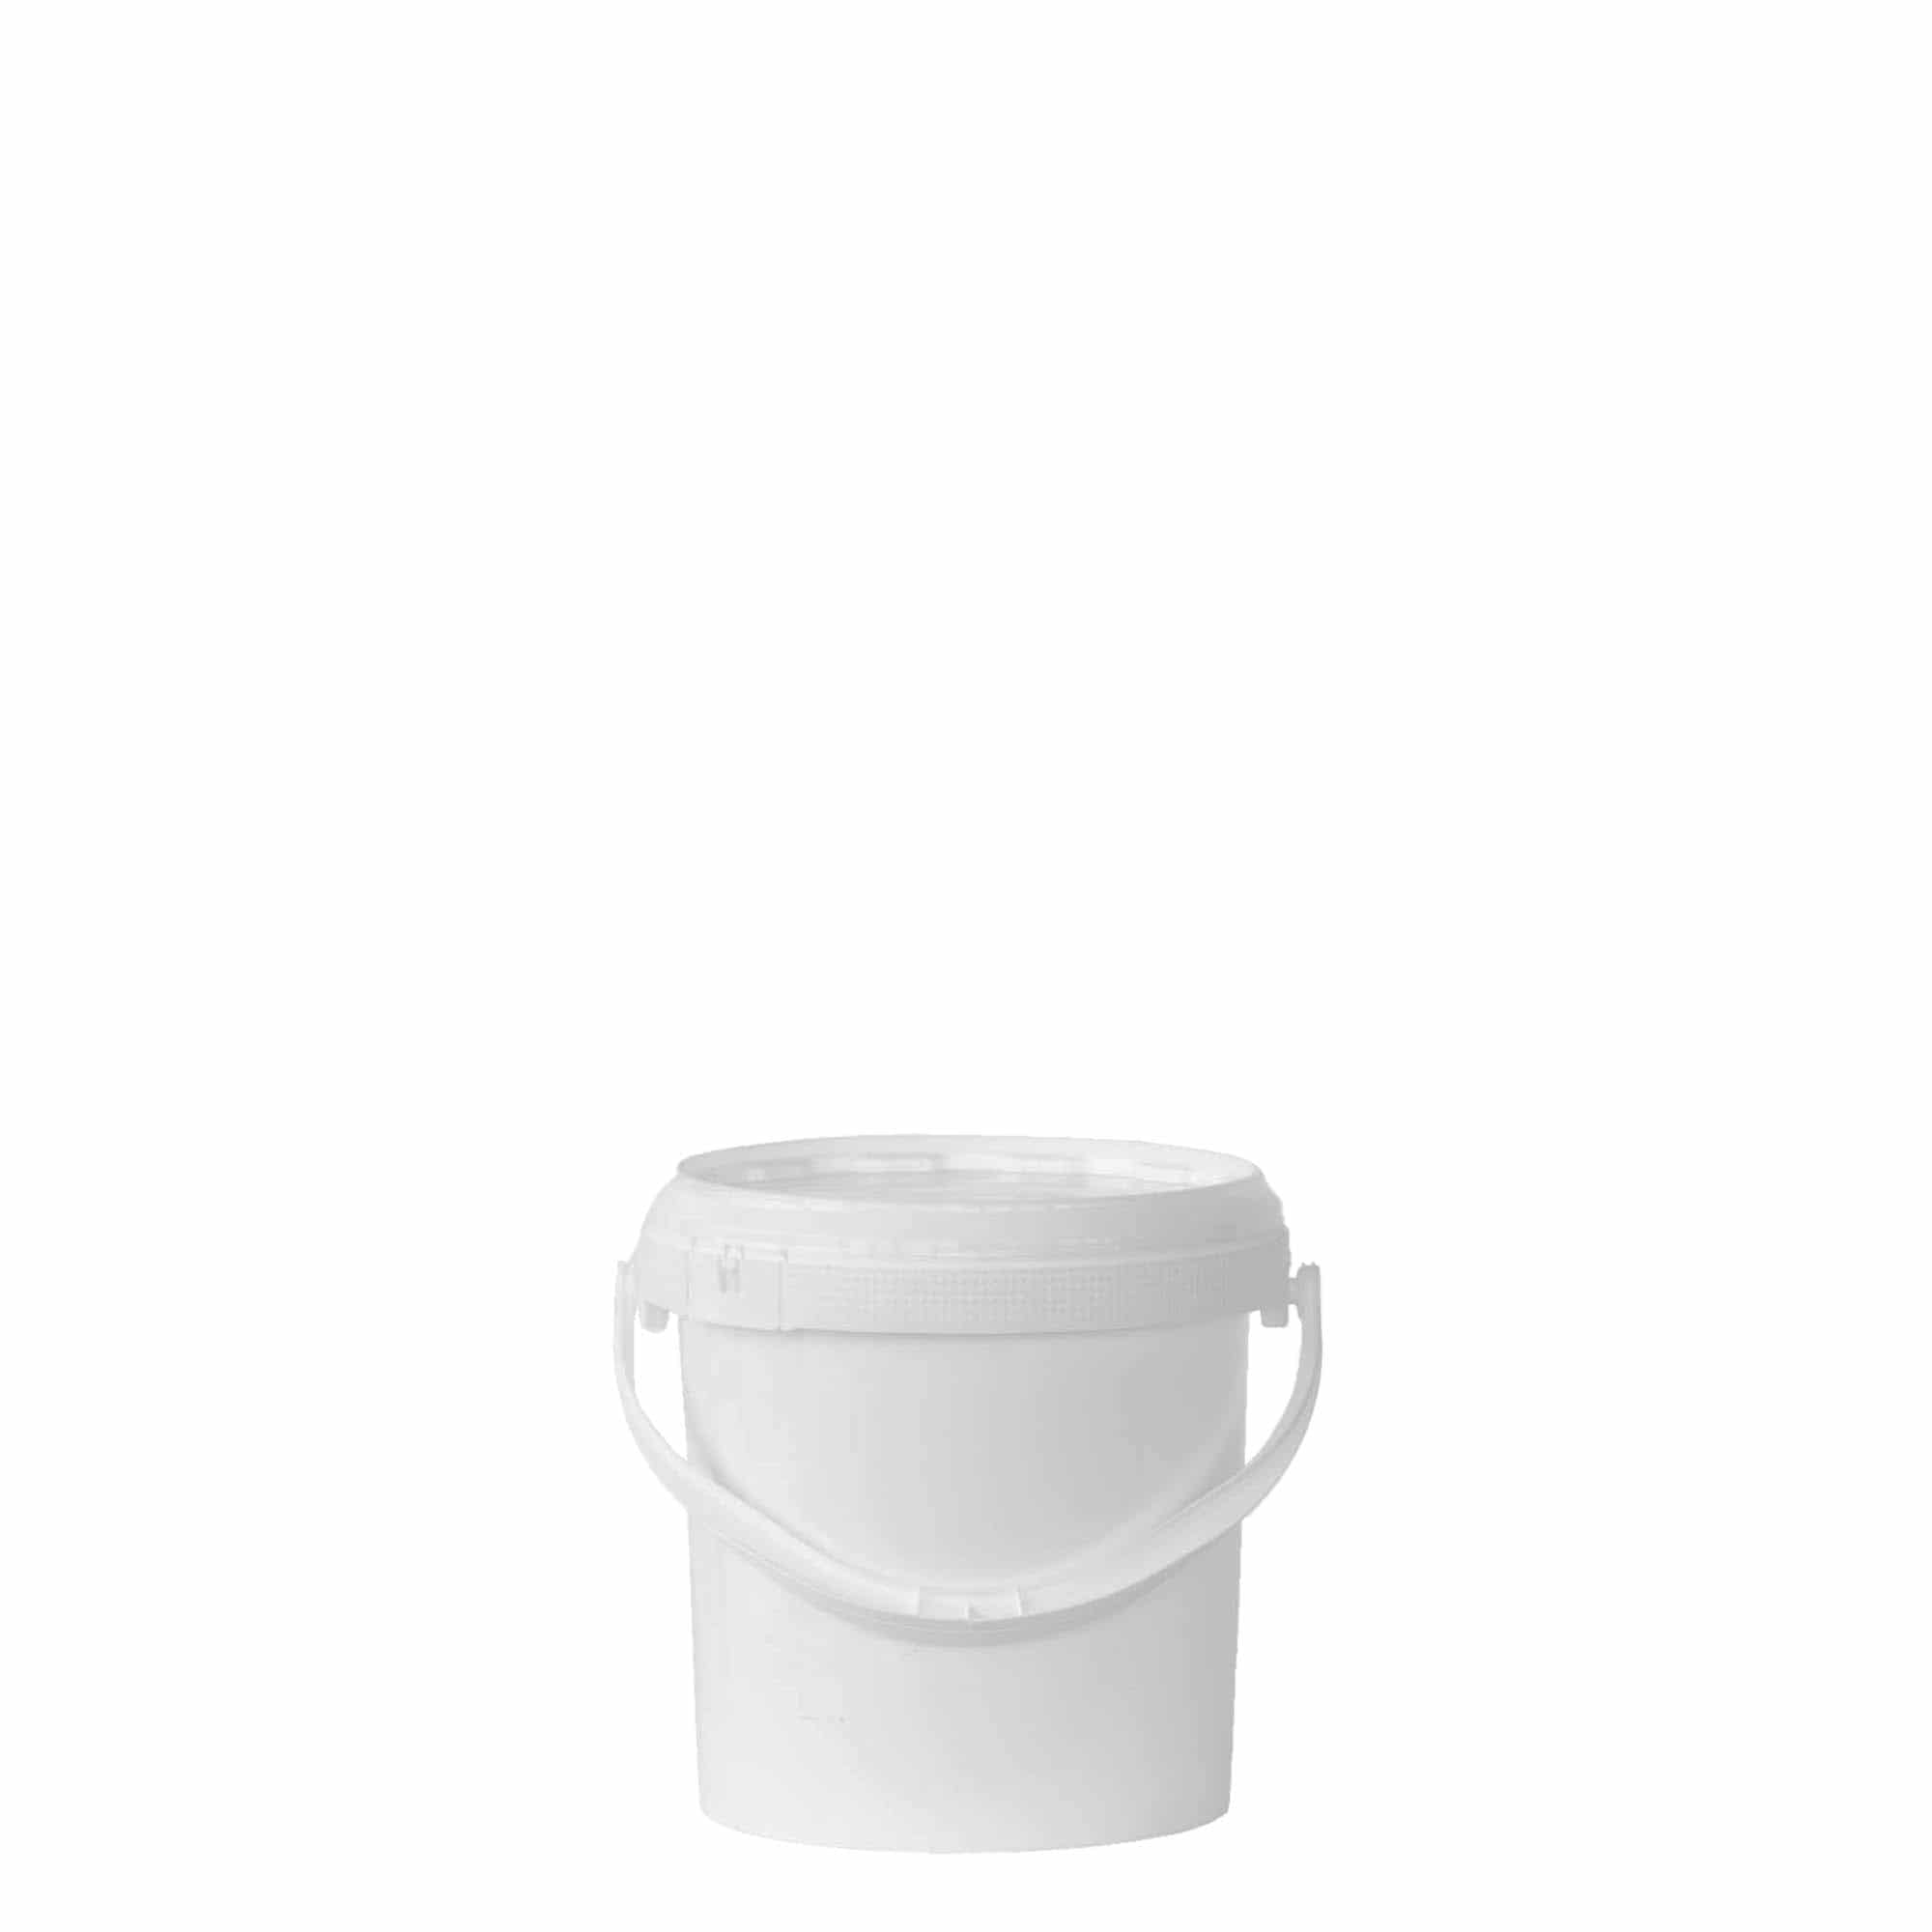 1.8 l bucket, PP plastic, white